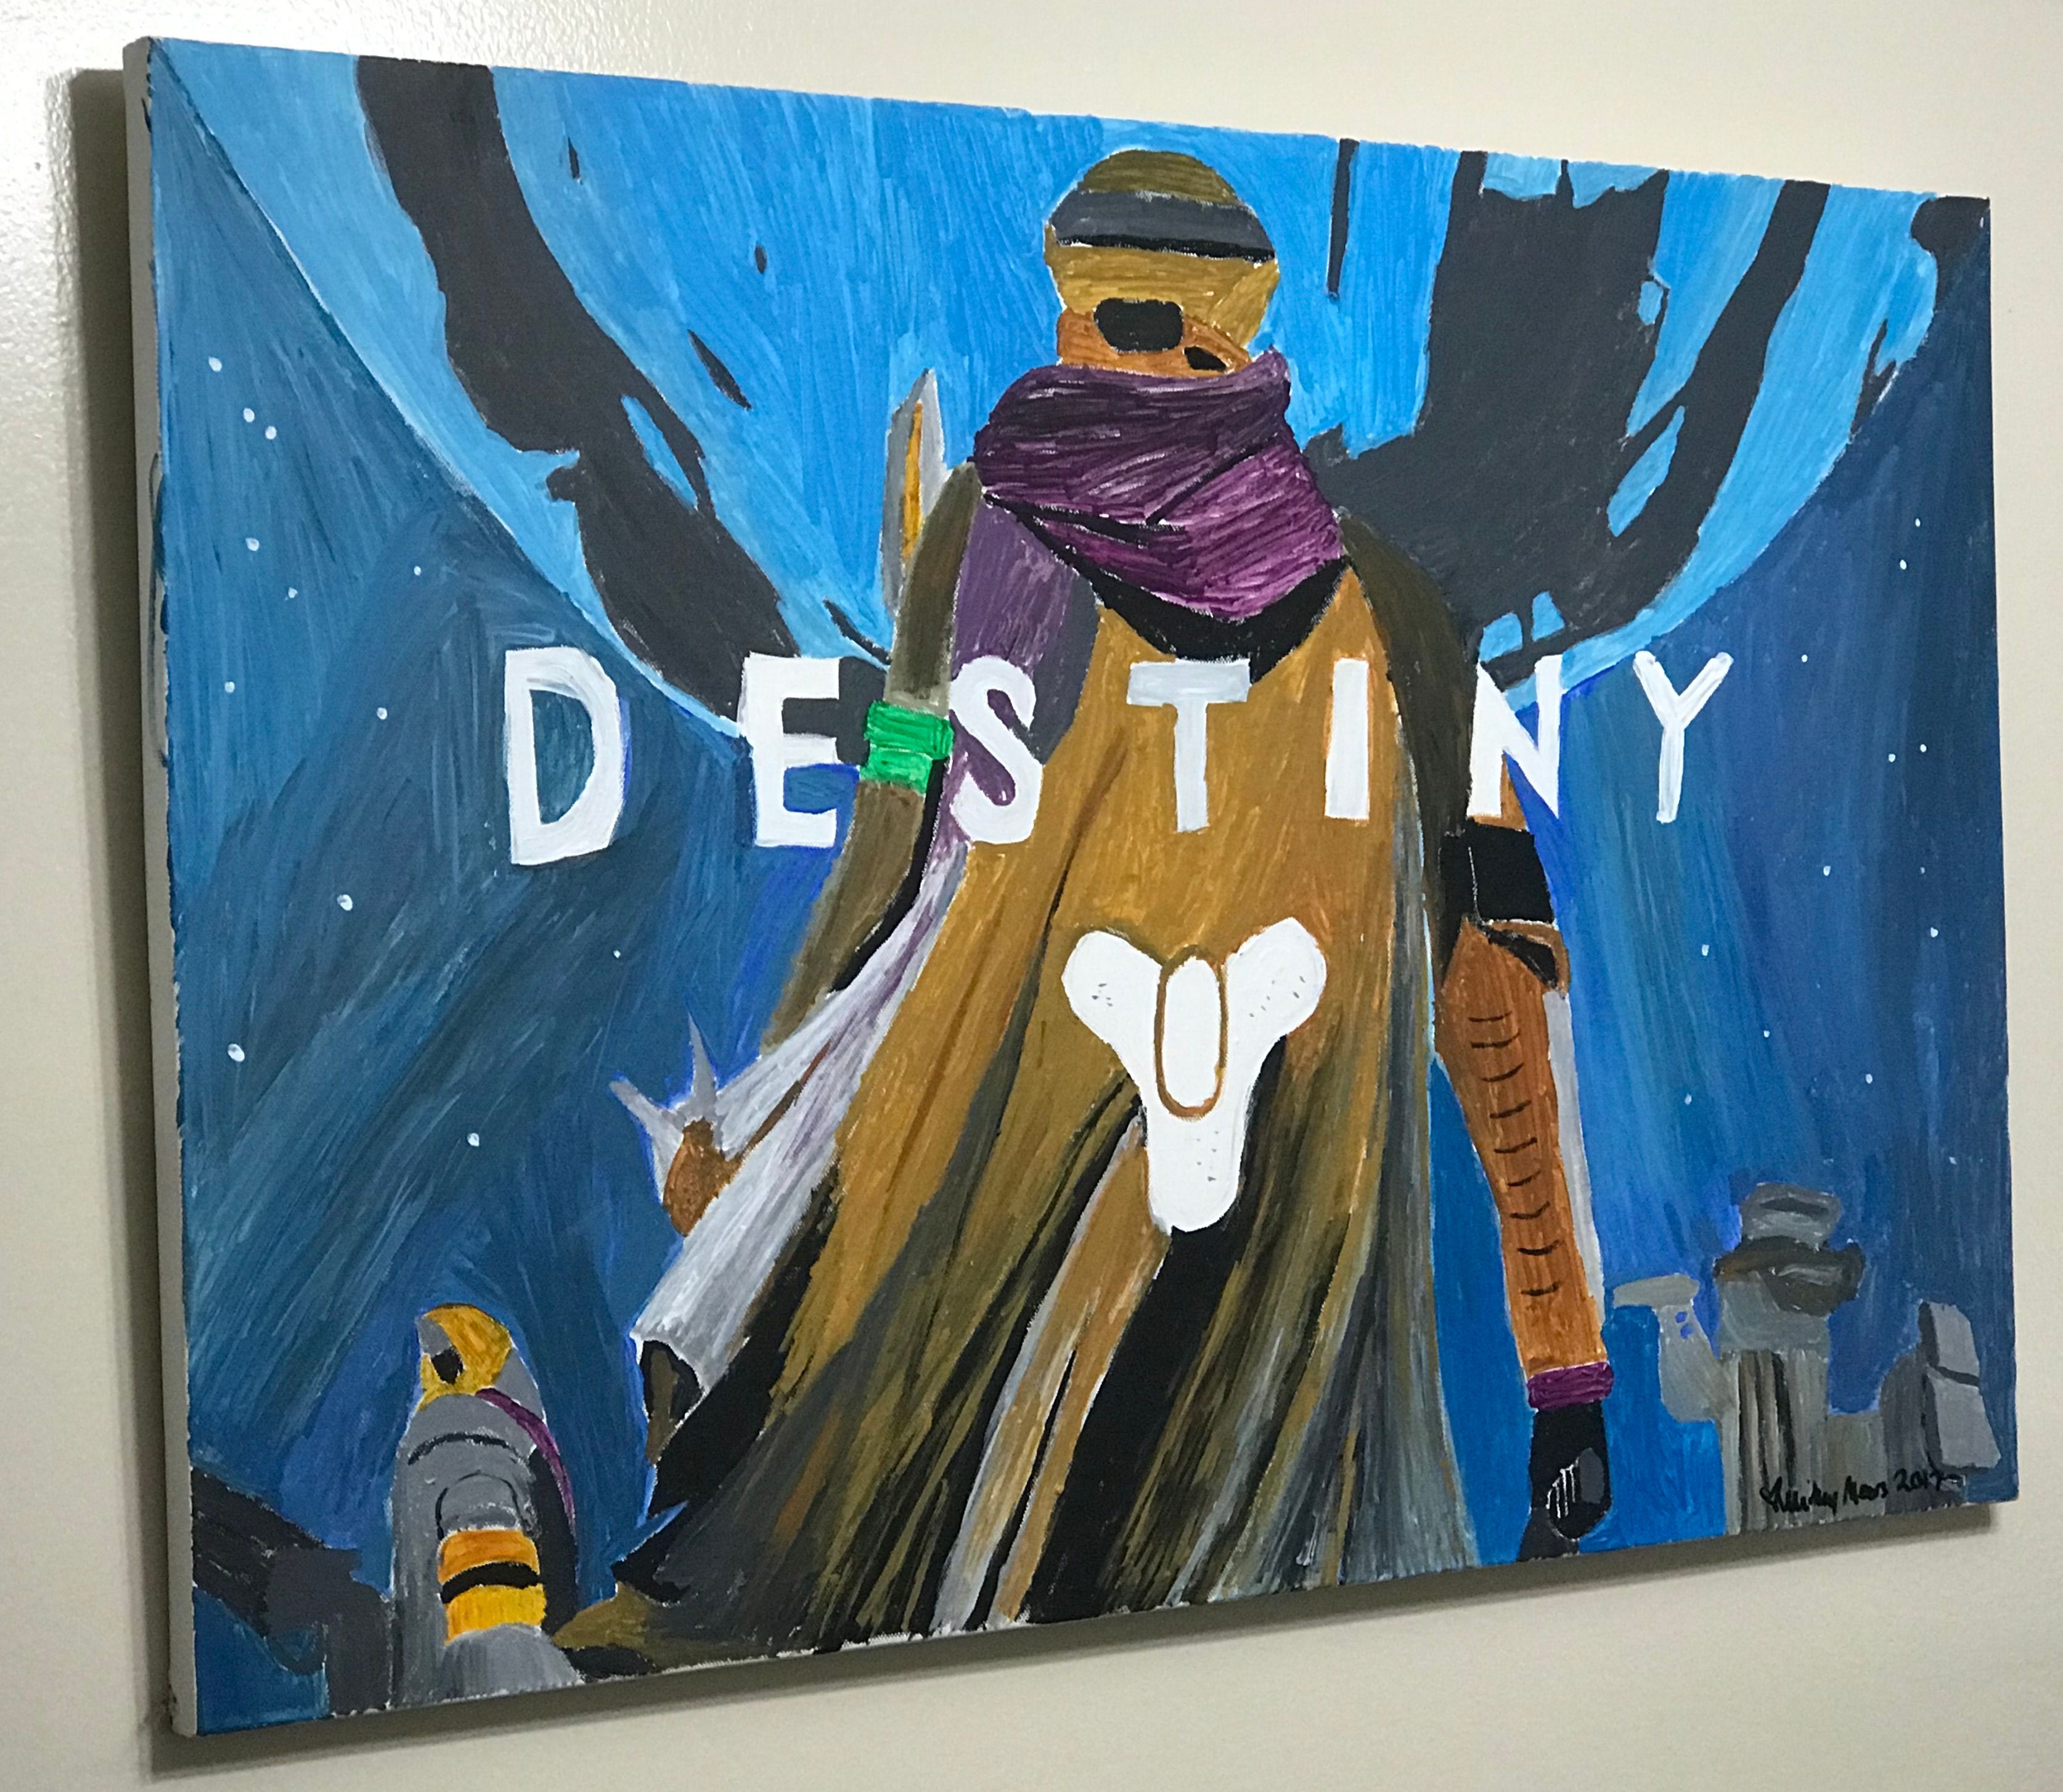 A painted rendition of Destiny promotional art.